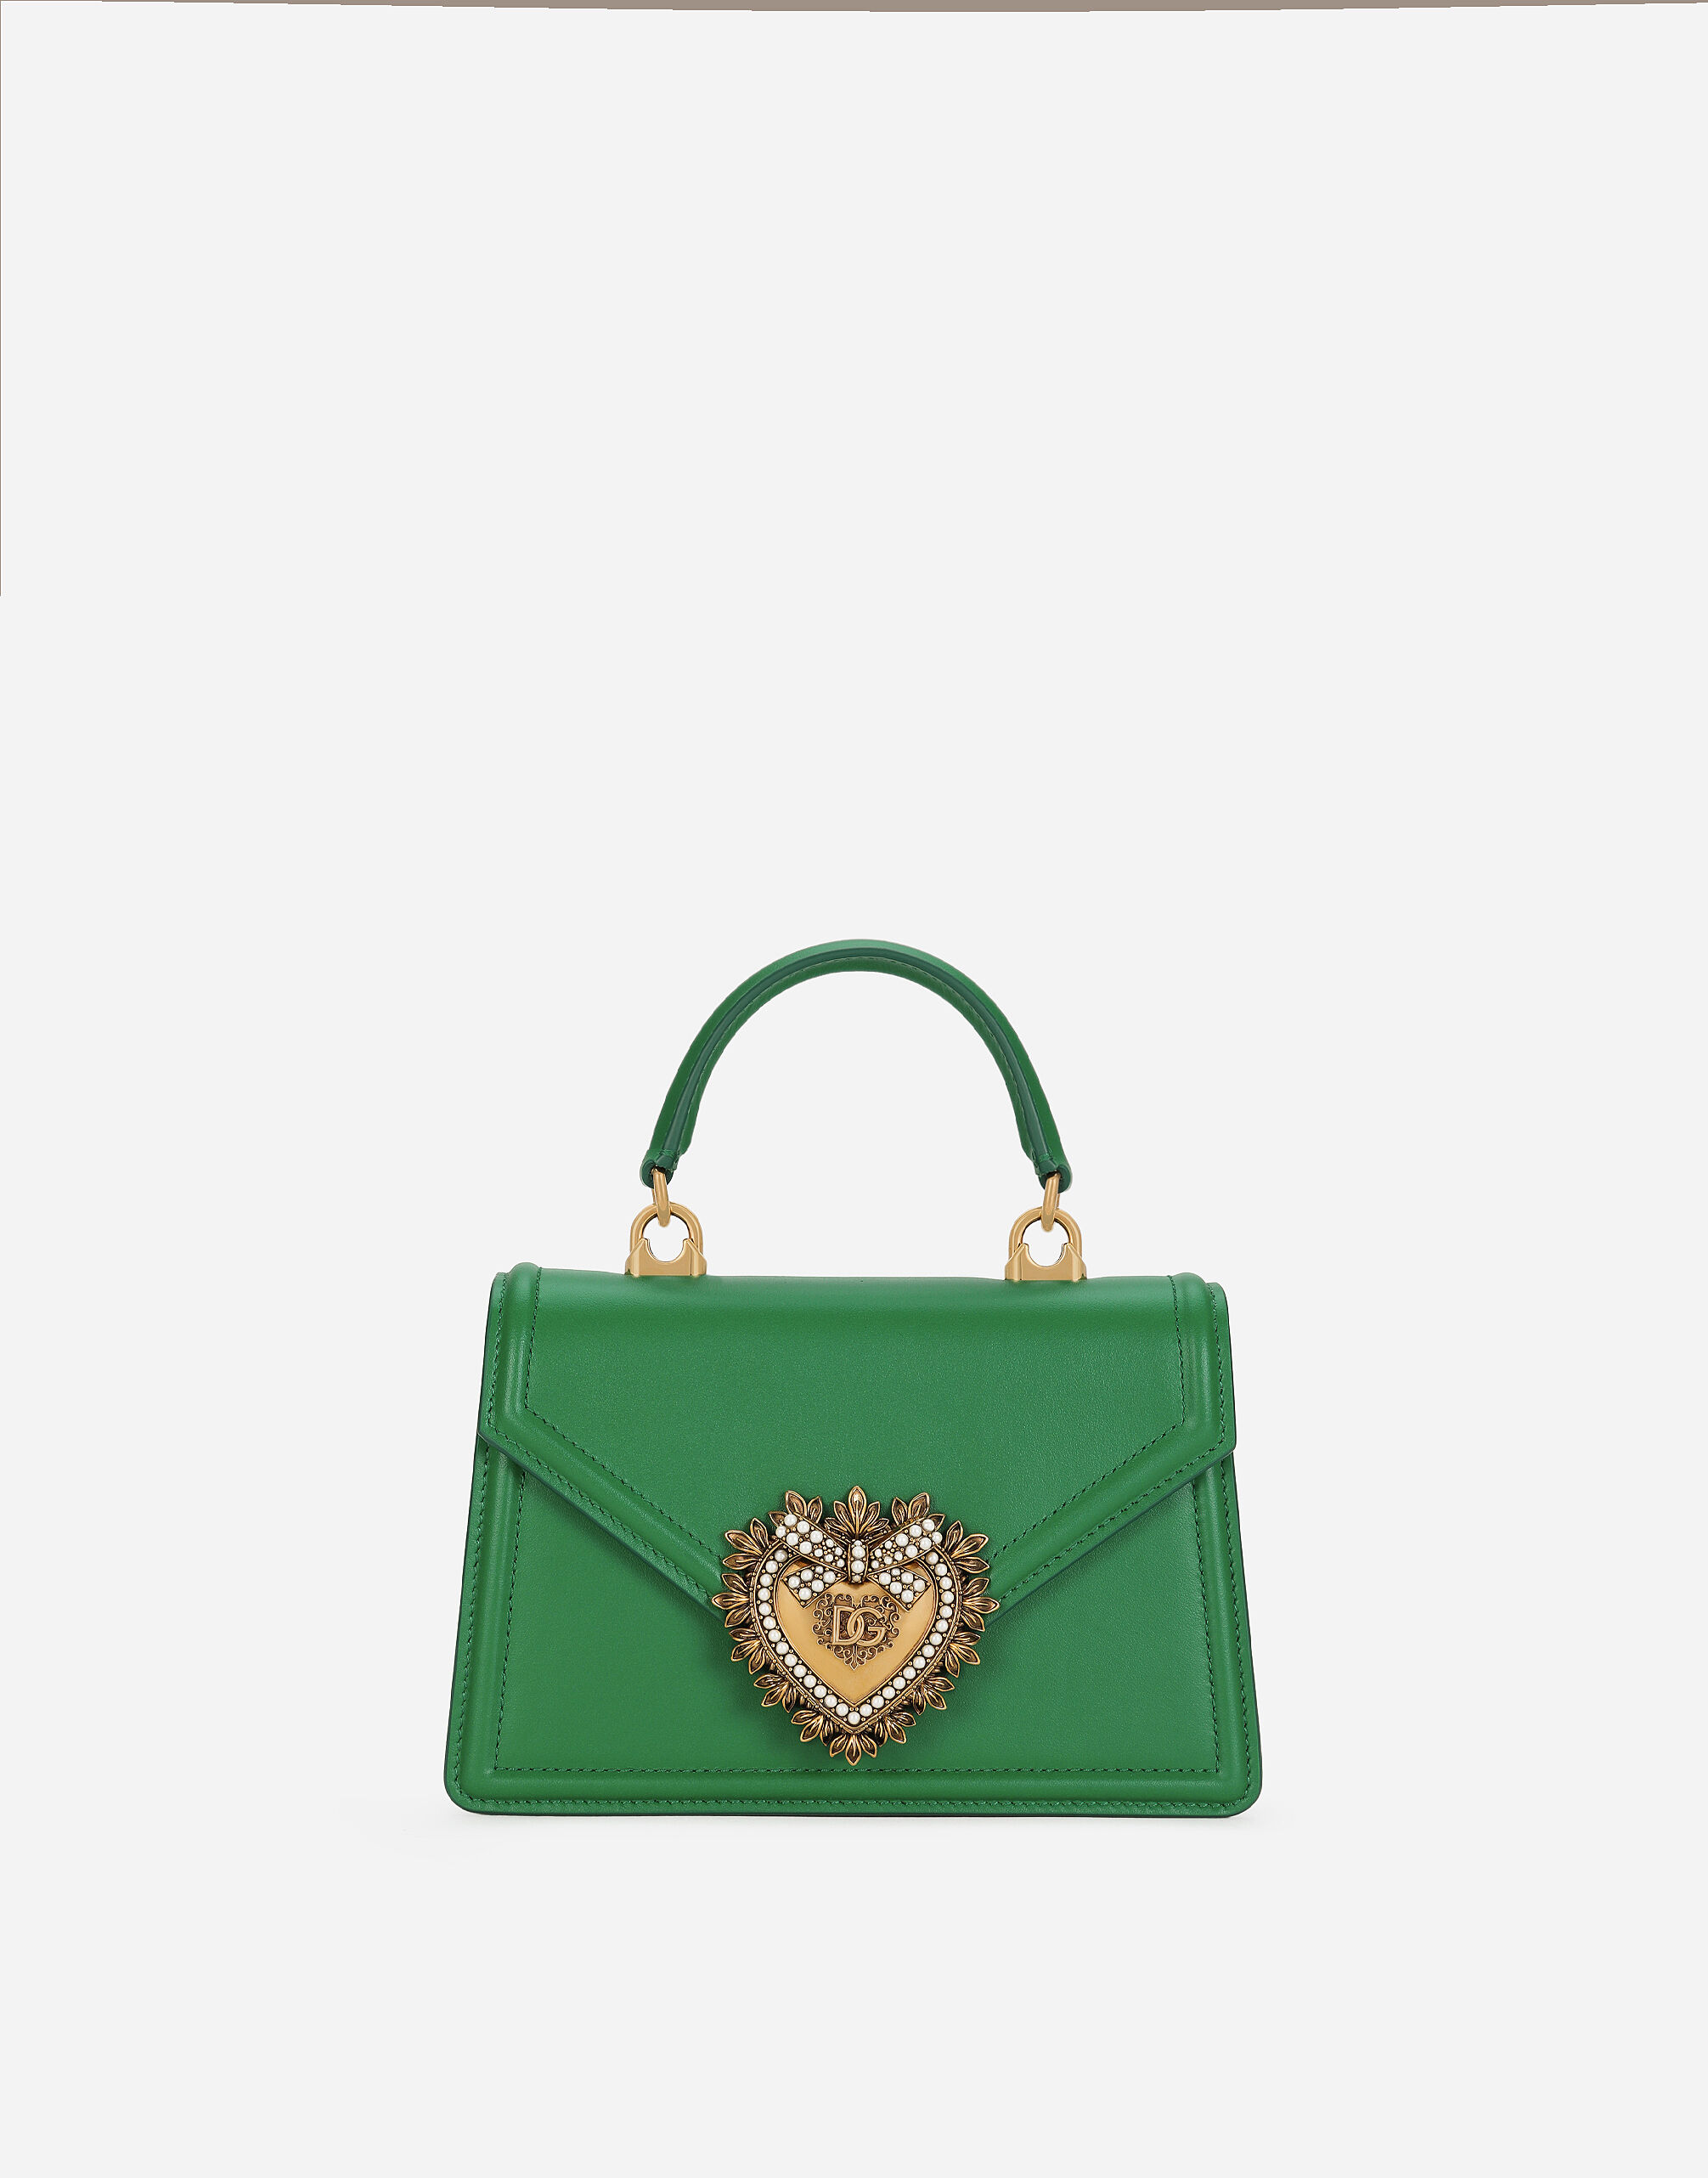 DOLCE & GABBANA: handbag for women - Pink | Dolce & Gabbana handbag  BB6003A1001 online at GIGLIO.COM